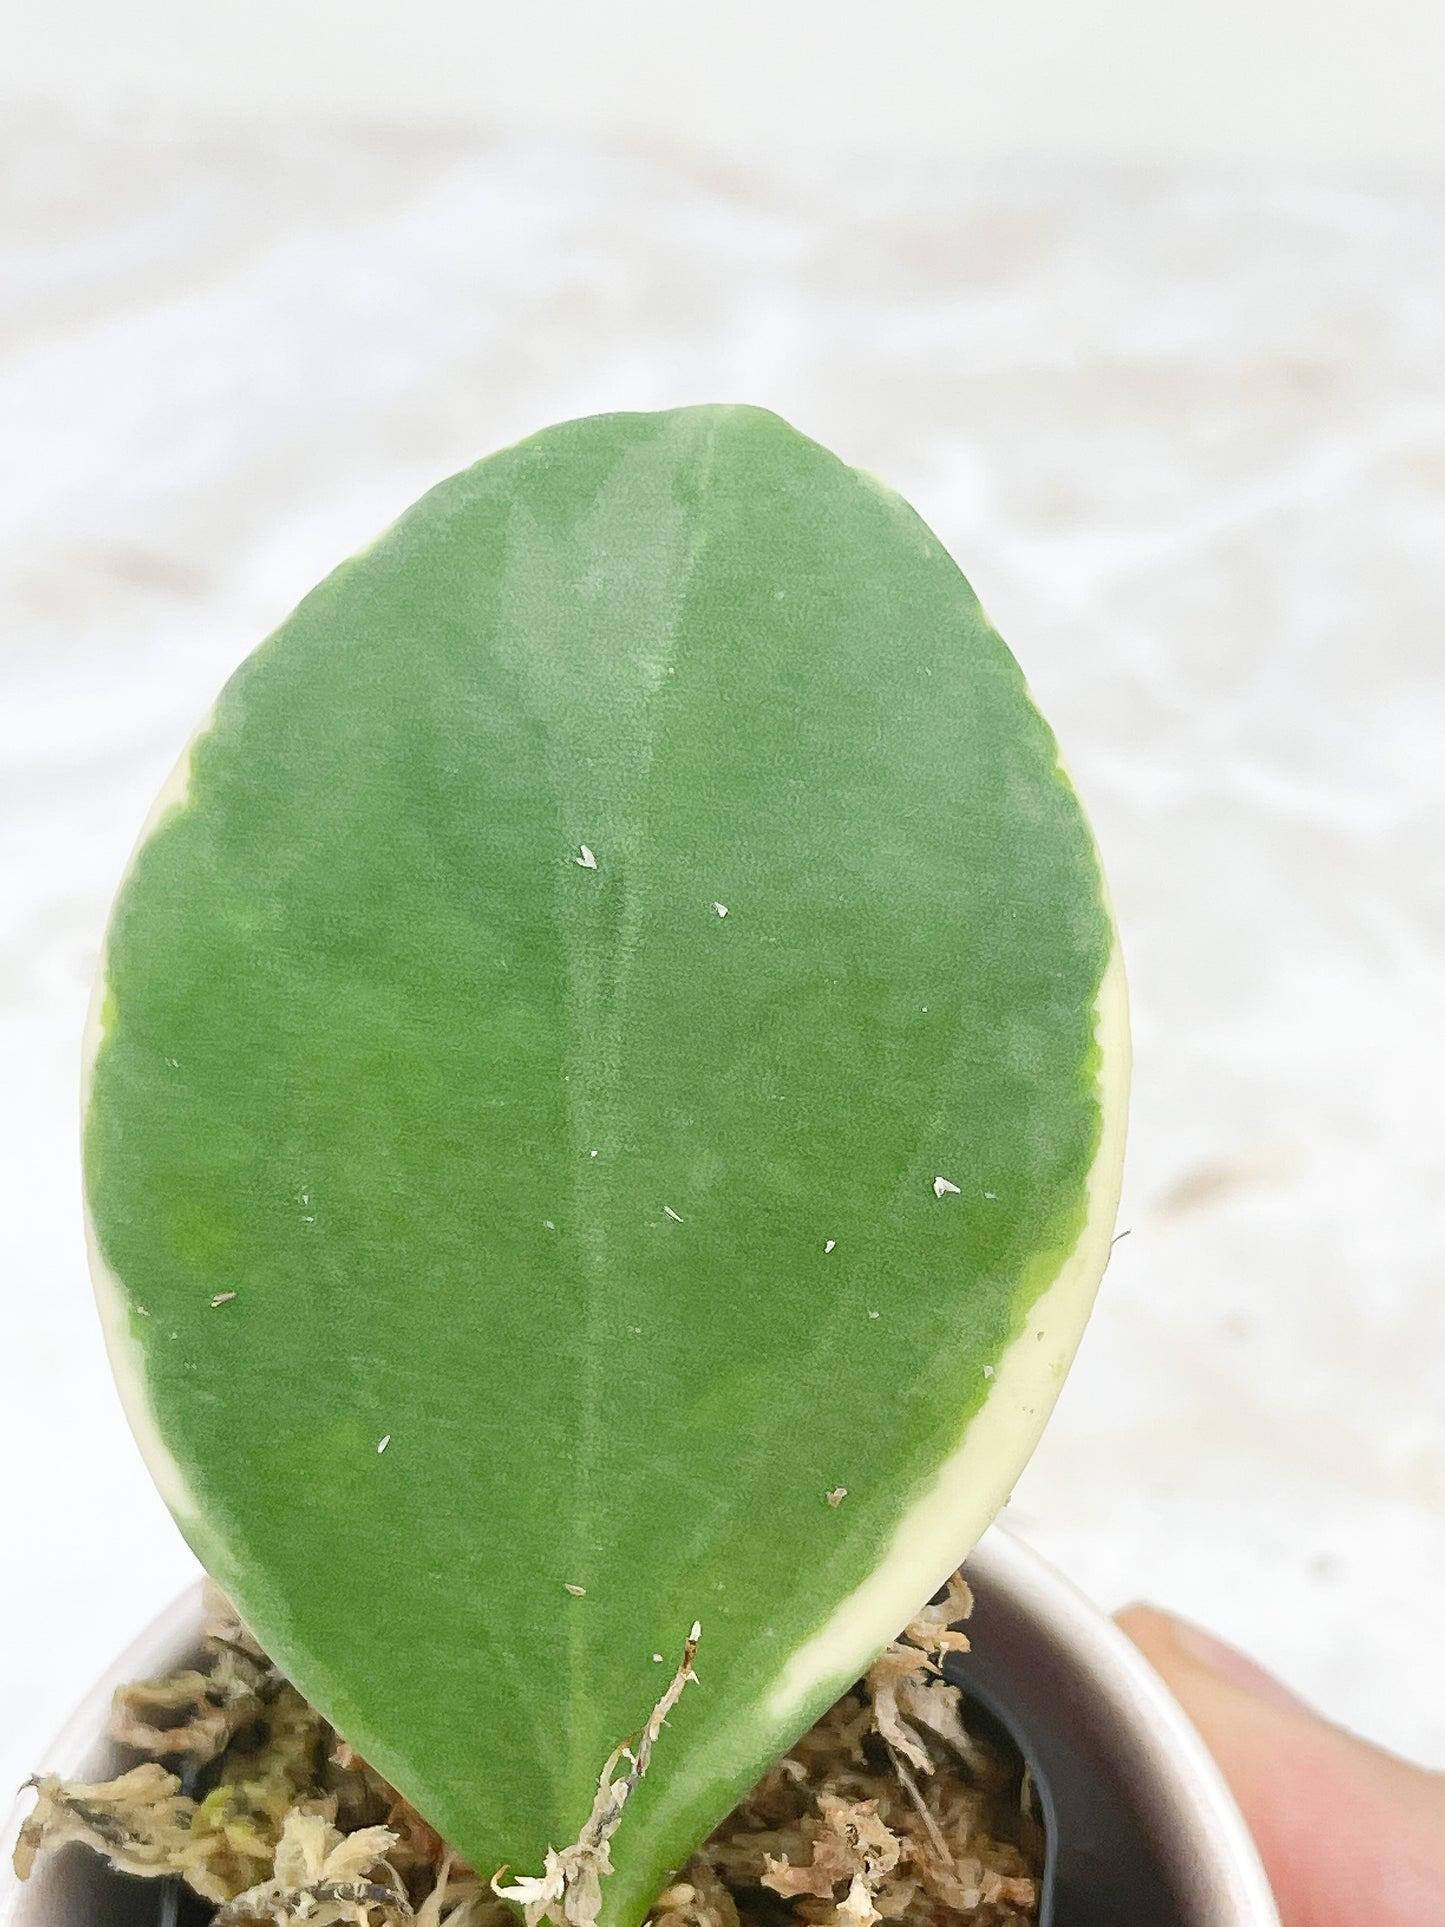 Hoya pachyclada variegated "New moon"